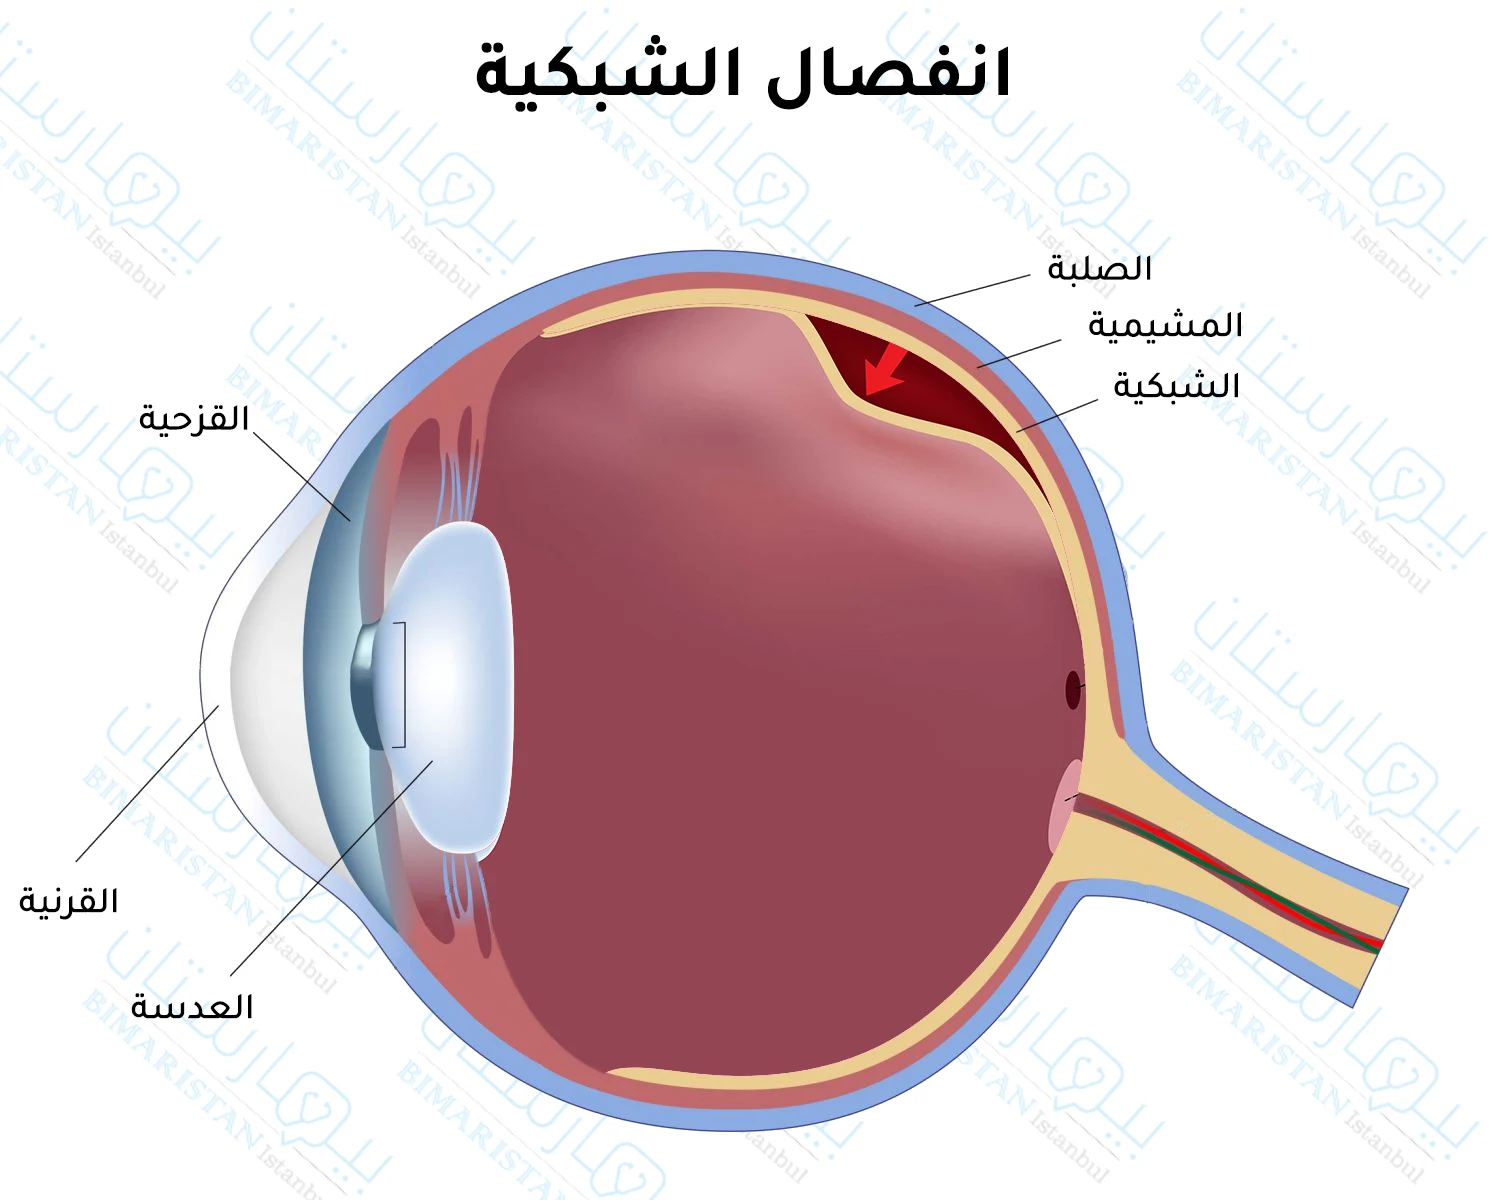 An image showing a detached retina